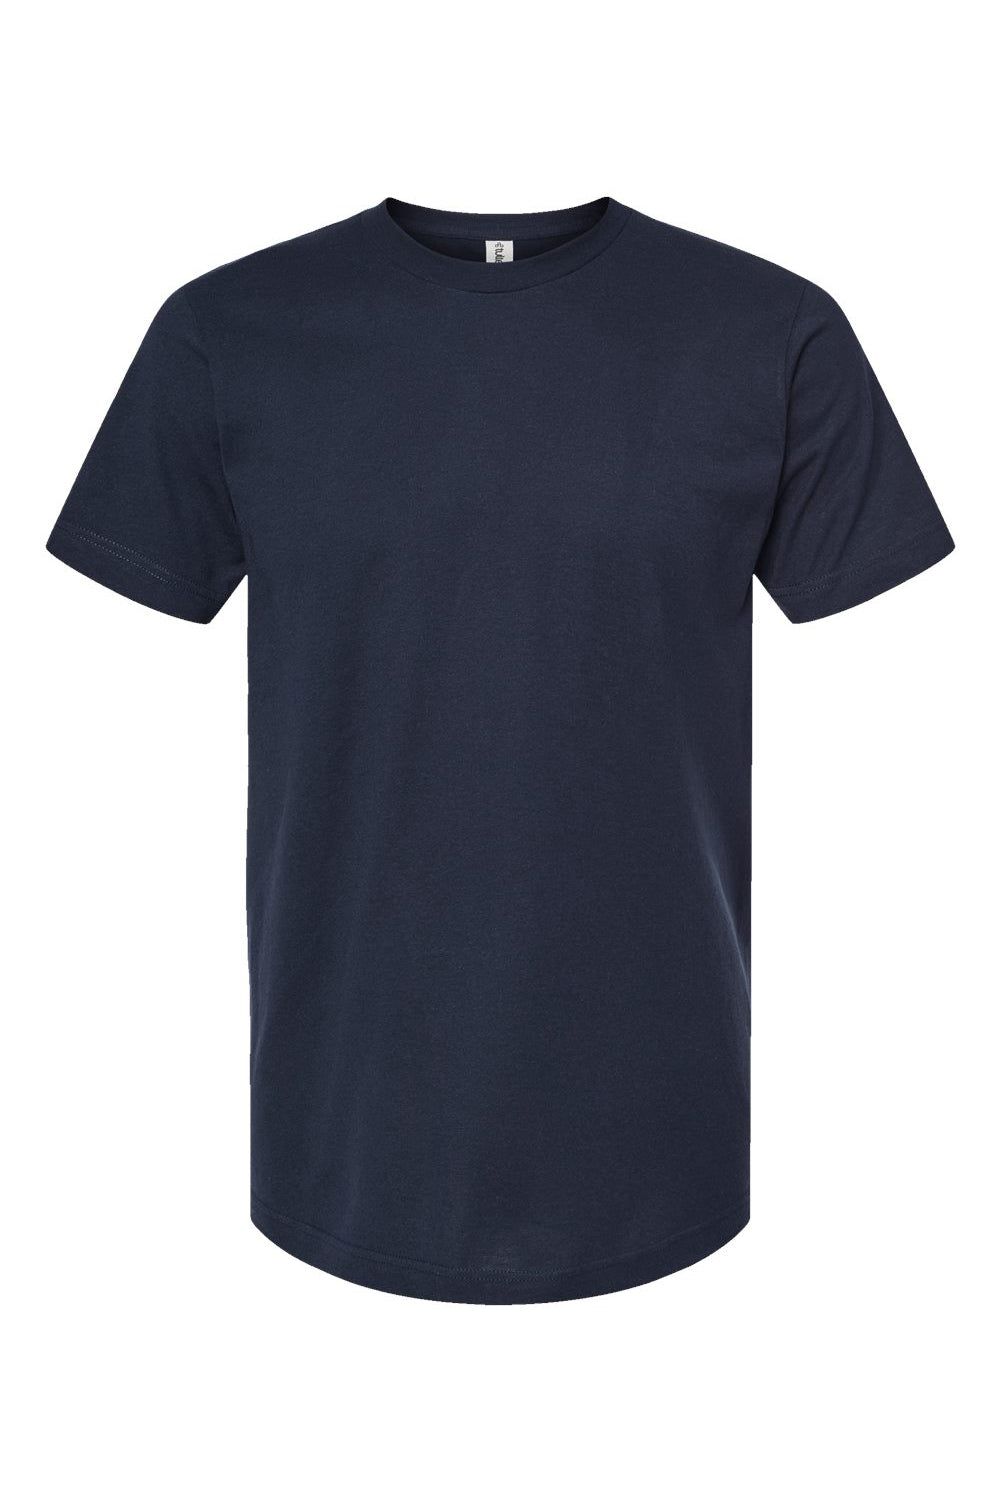 Tultex 202 Mens Fine Jersey Short Sleeve Crewneck T-Shirt Navy Blue Flat Front